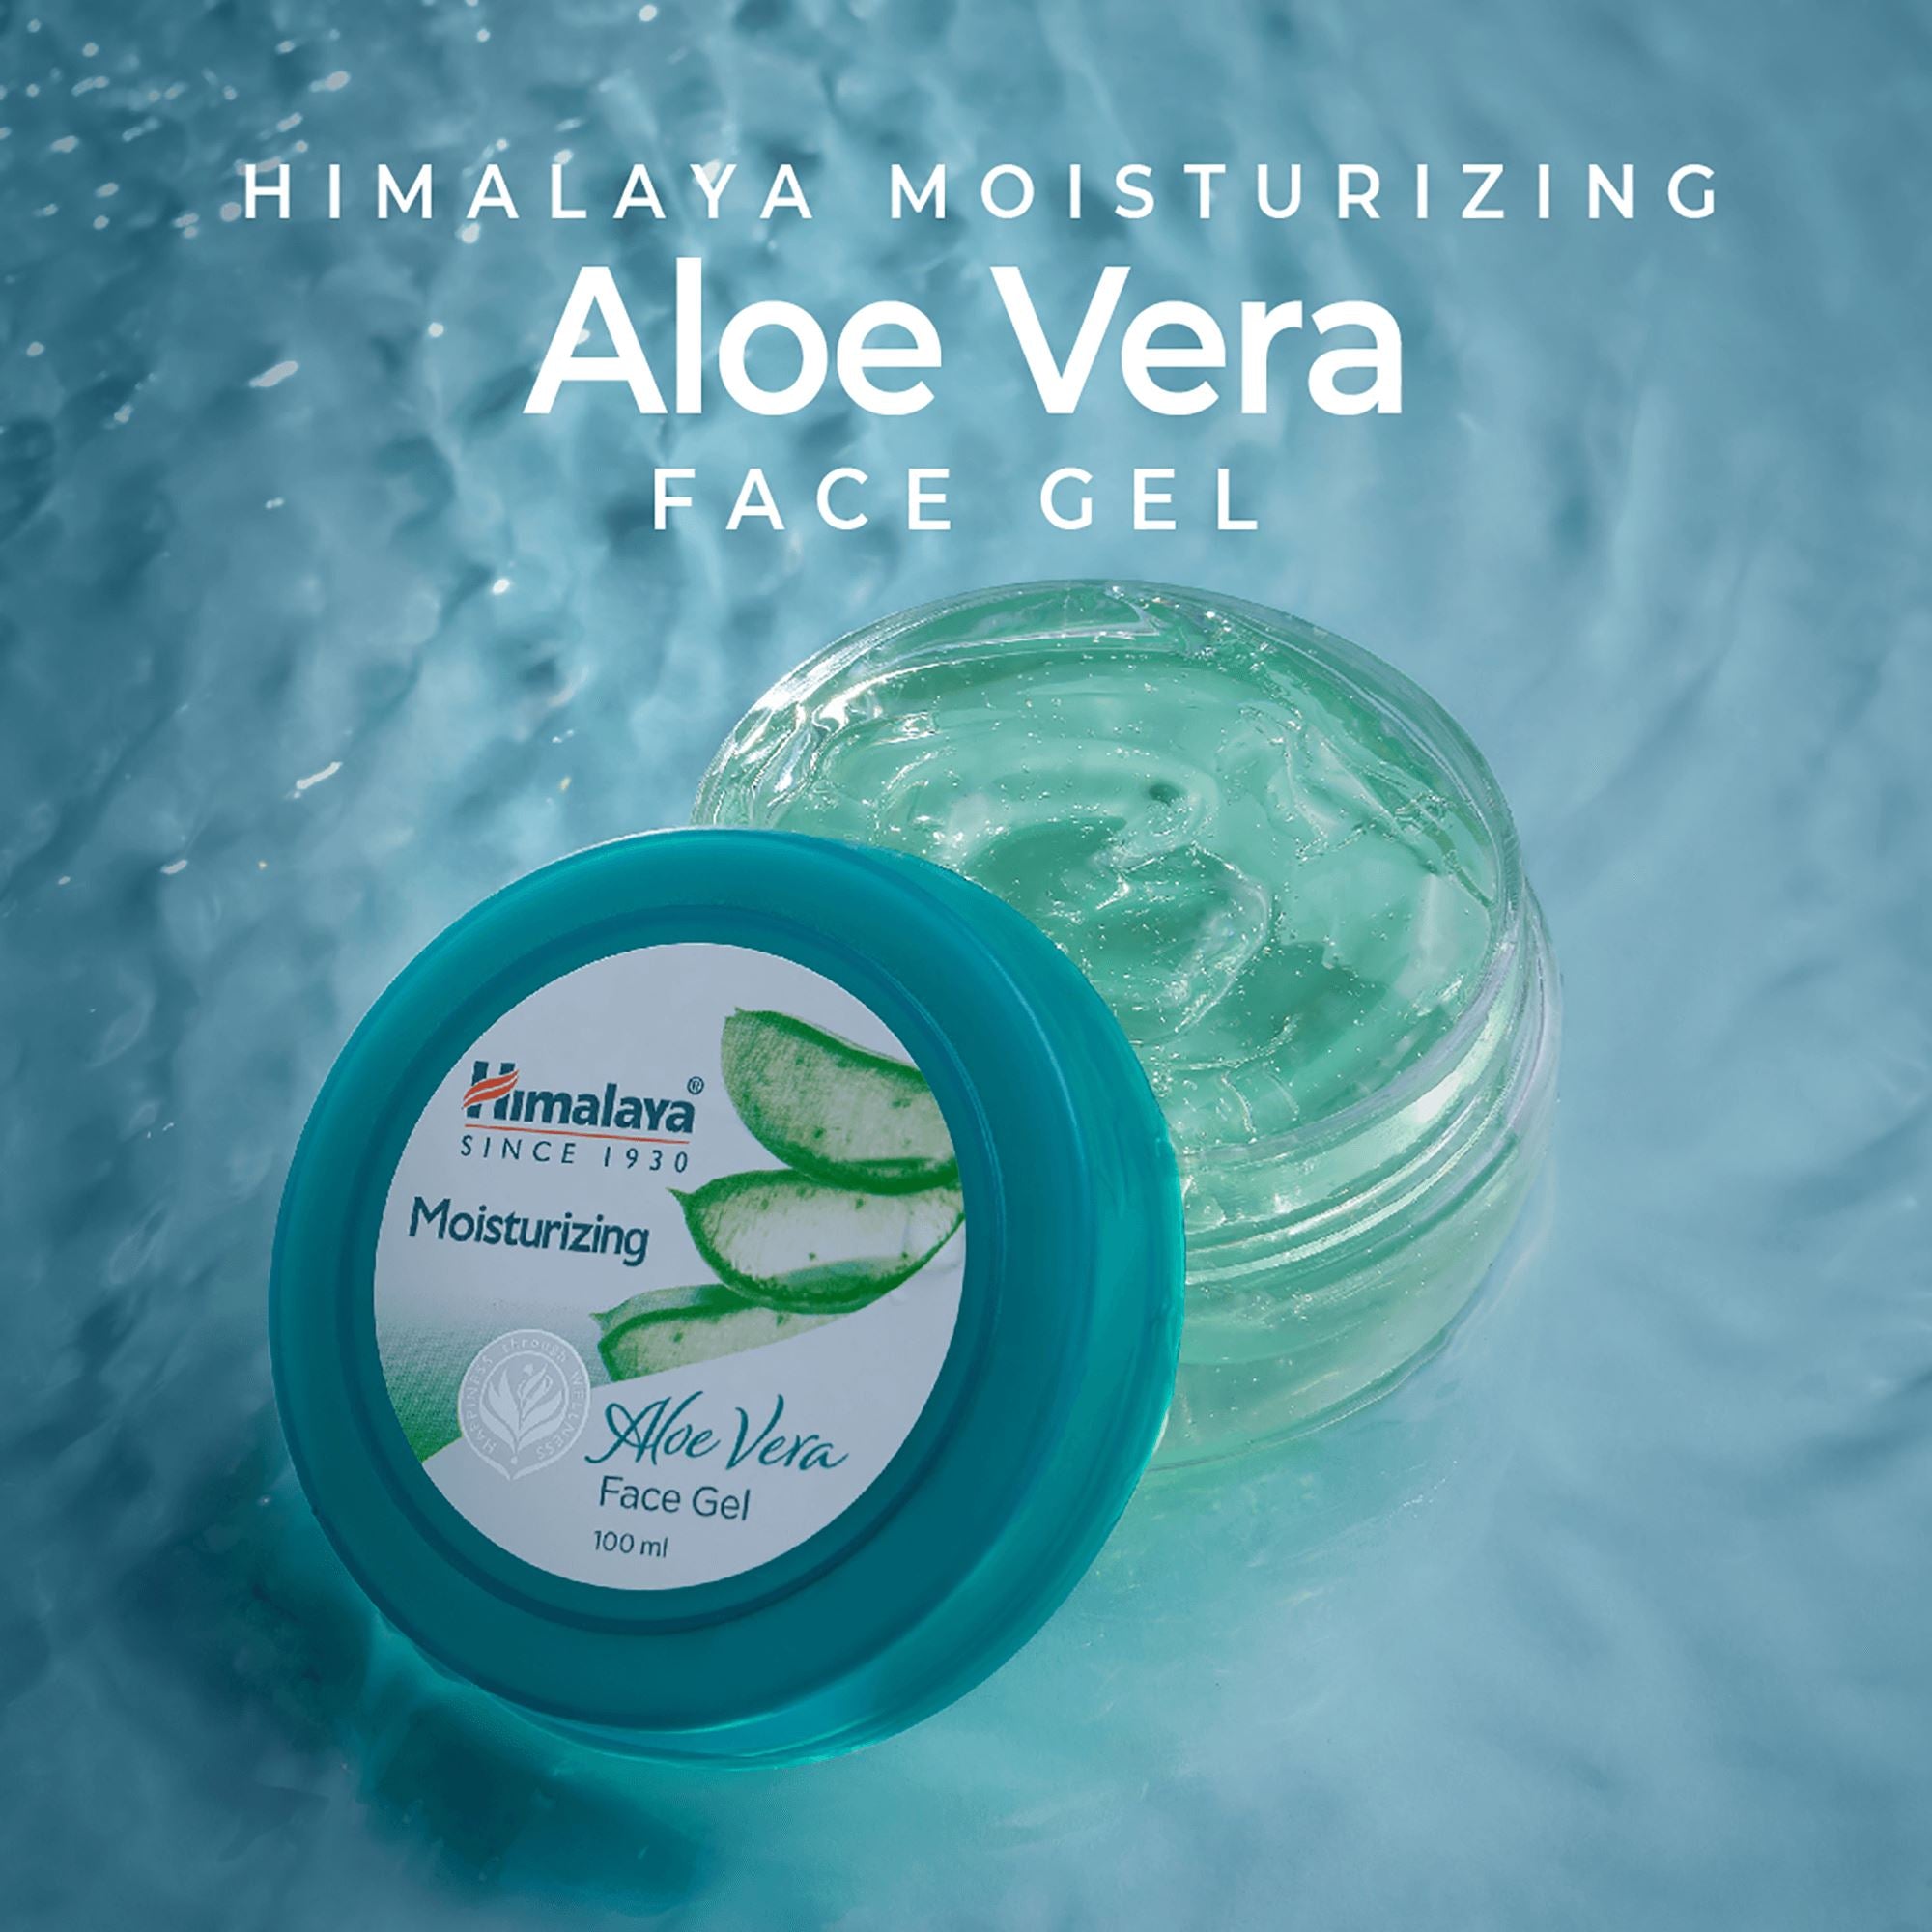 Himalaya Moisturizing Aloe Vera Face Gel - Hydrates Skin